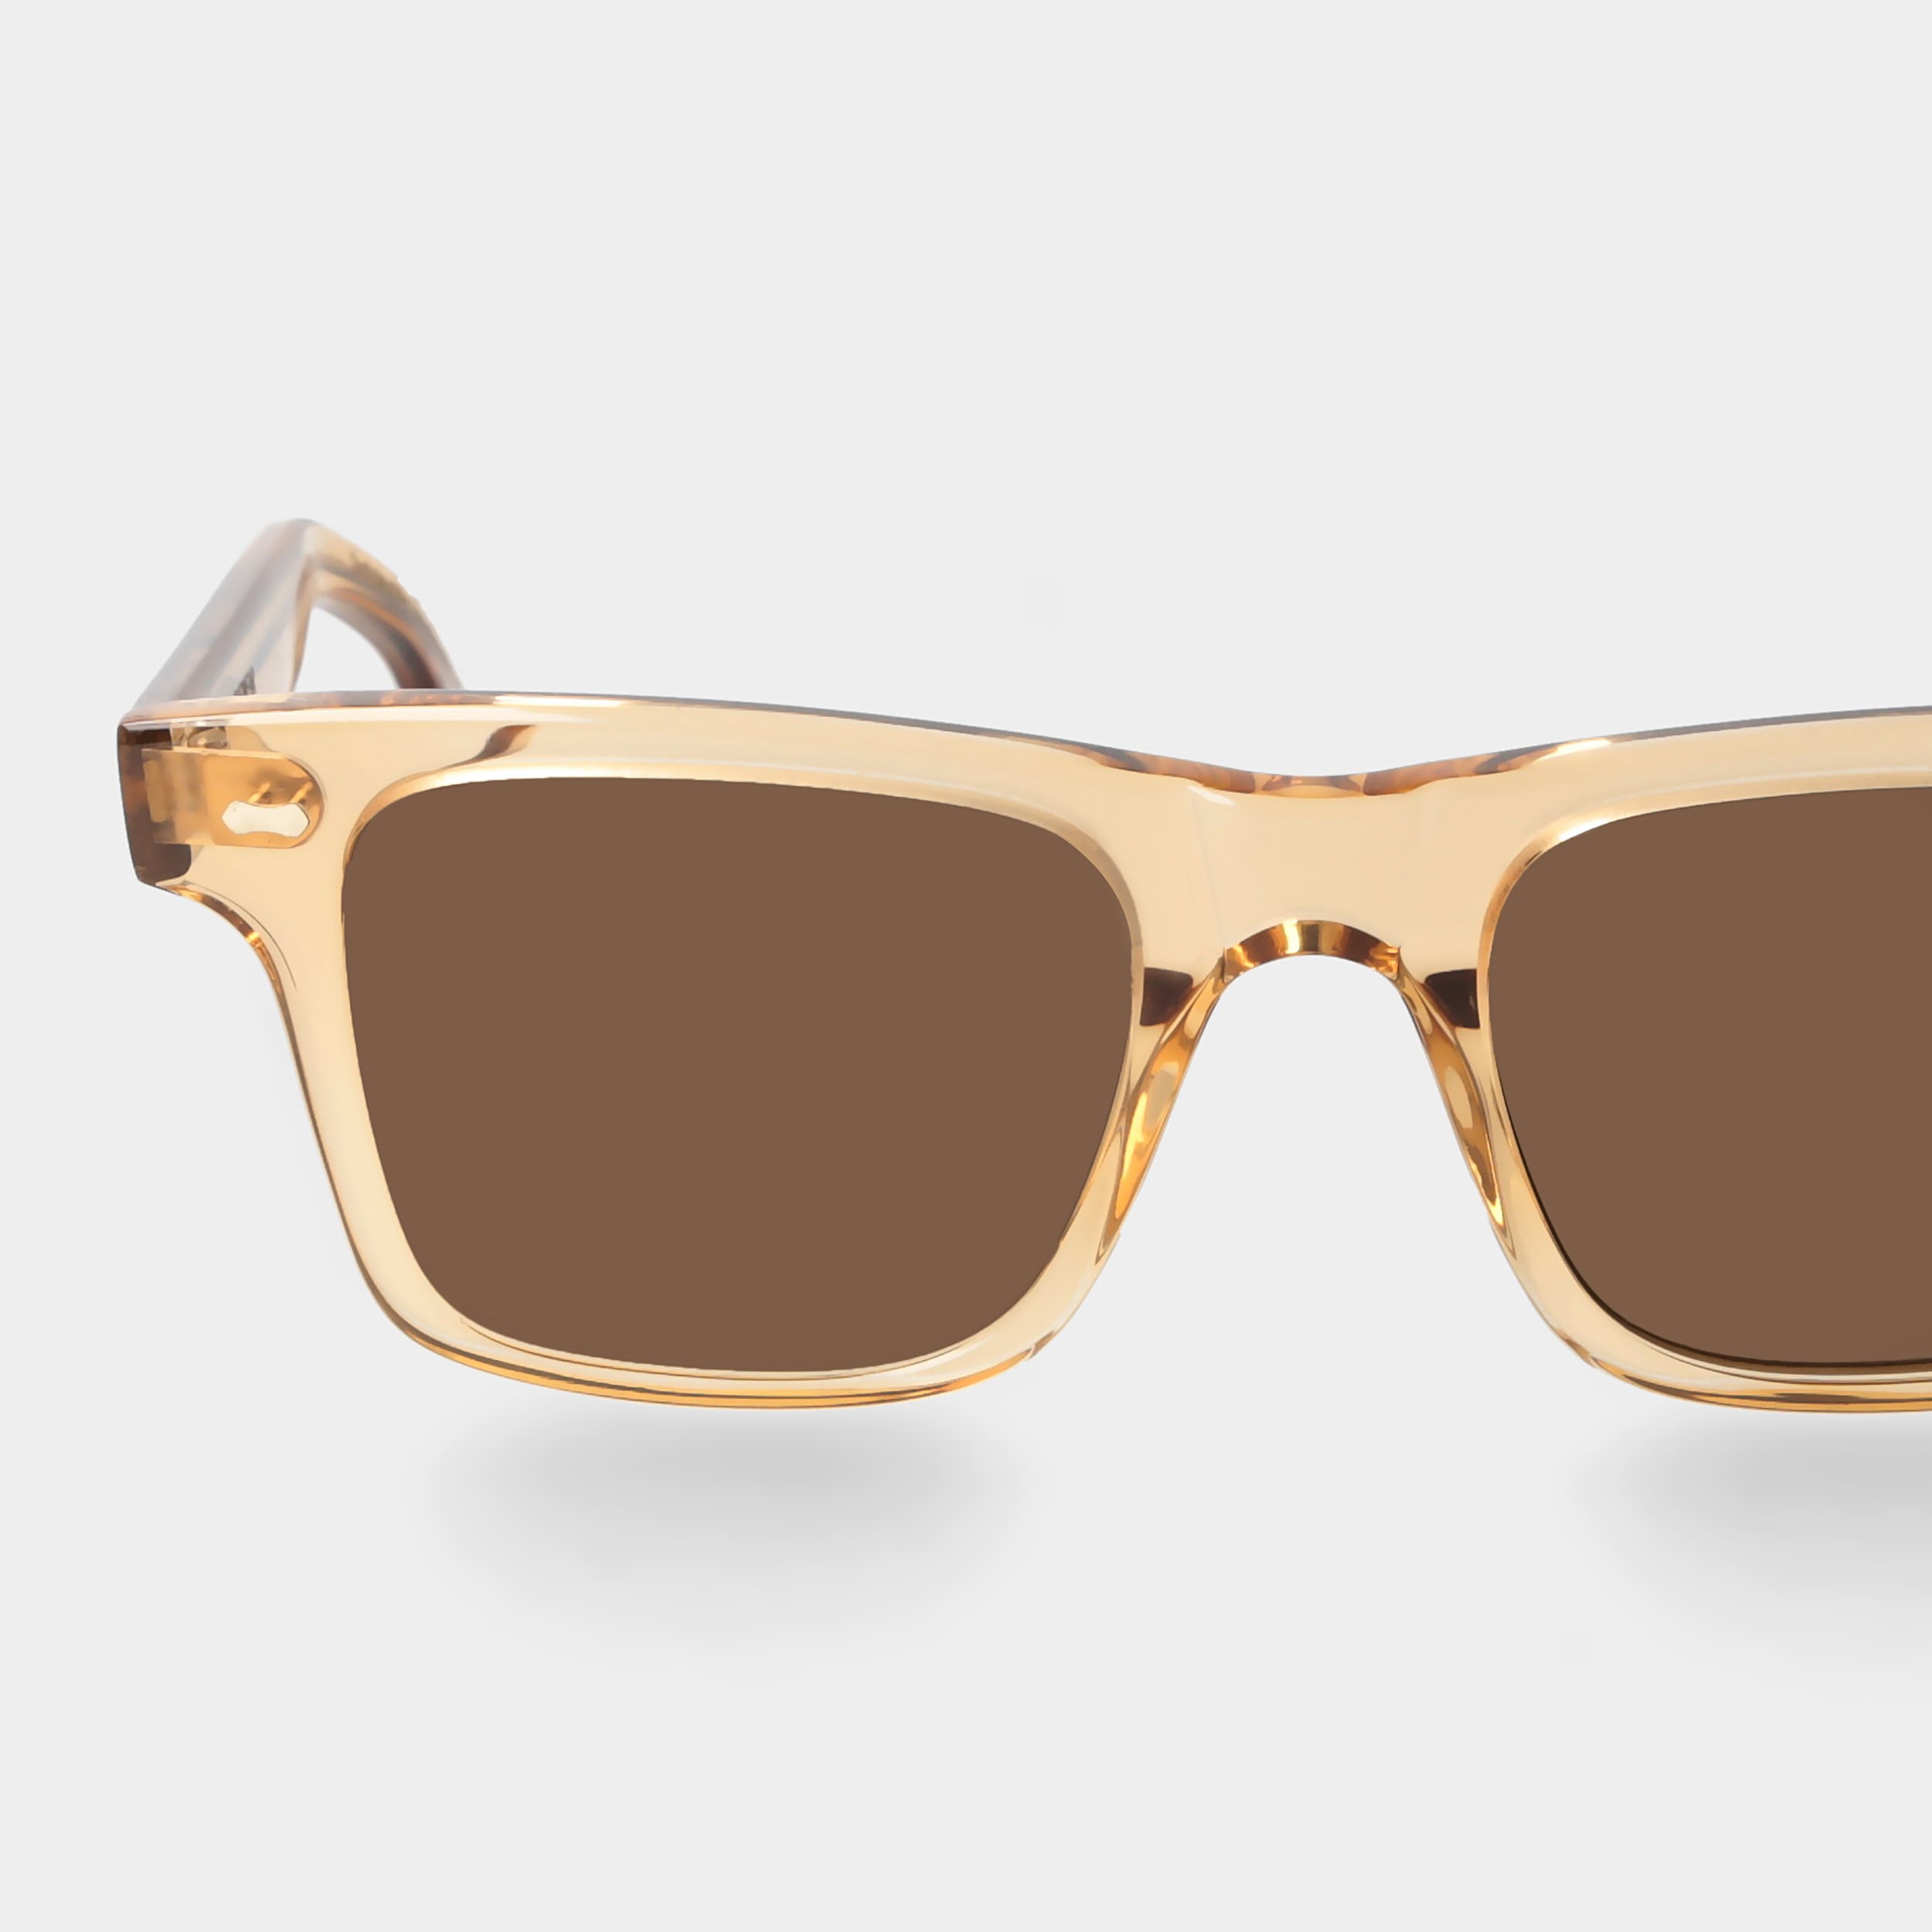 sunglasses-denim-eco-champagne-tobacco-sustainable-tbd-eyewear-lens